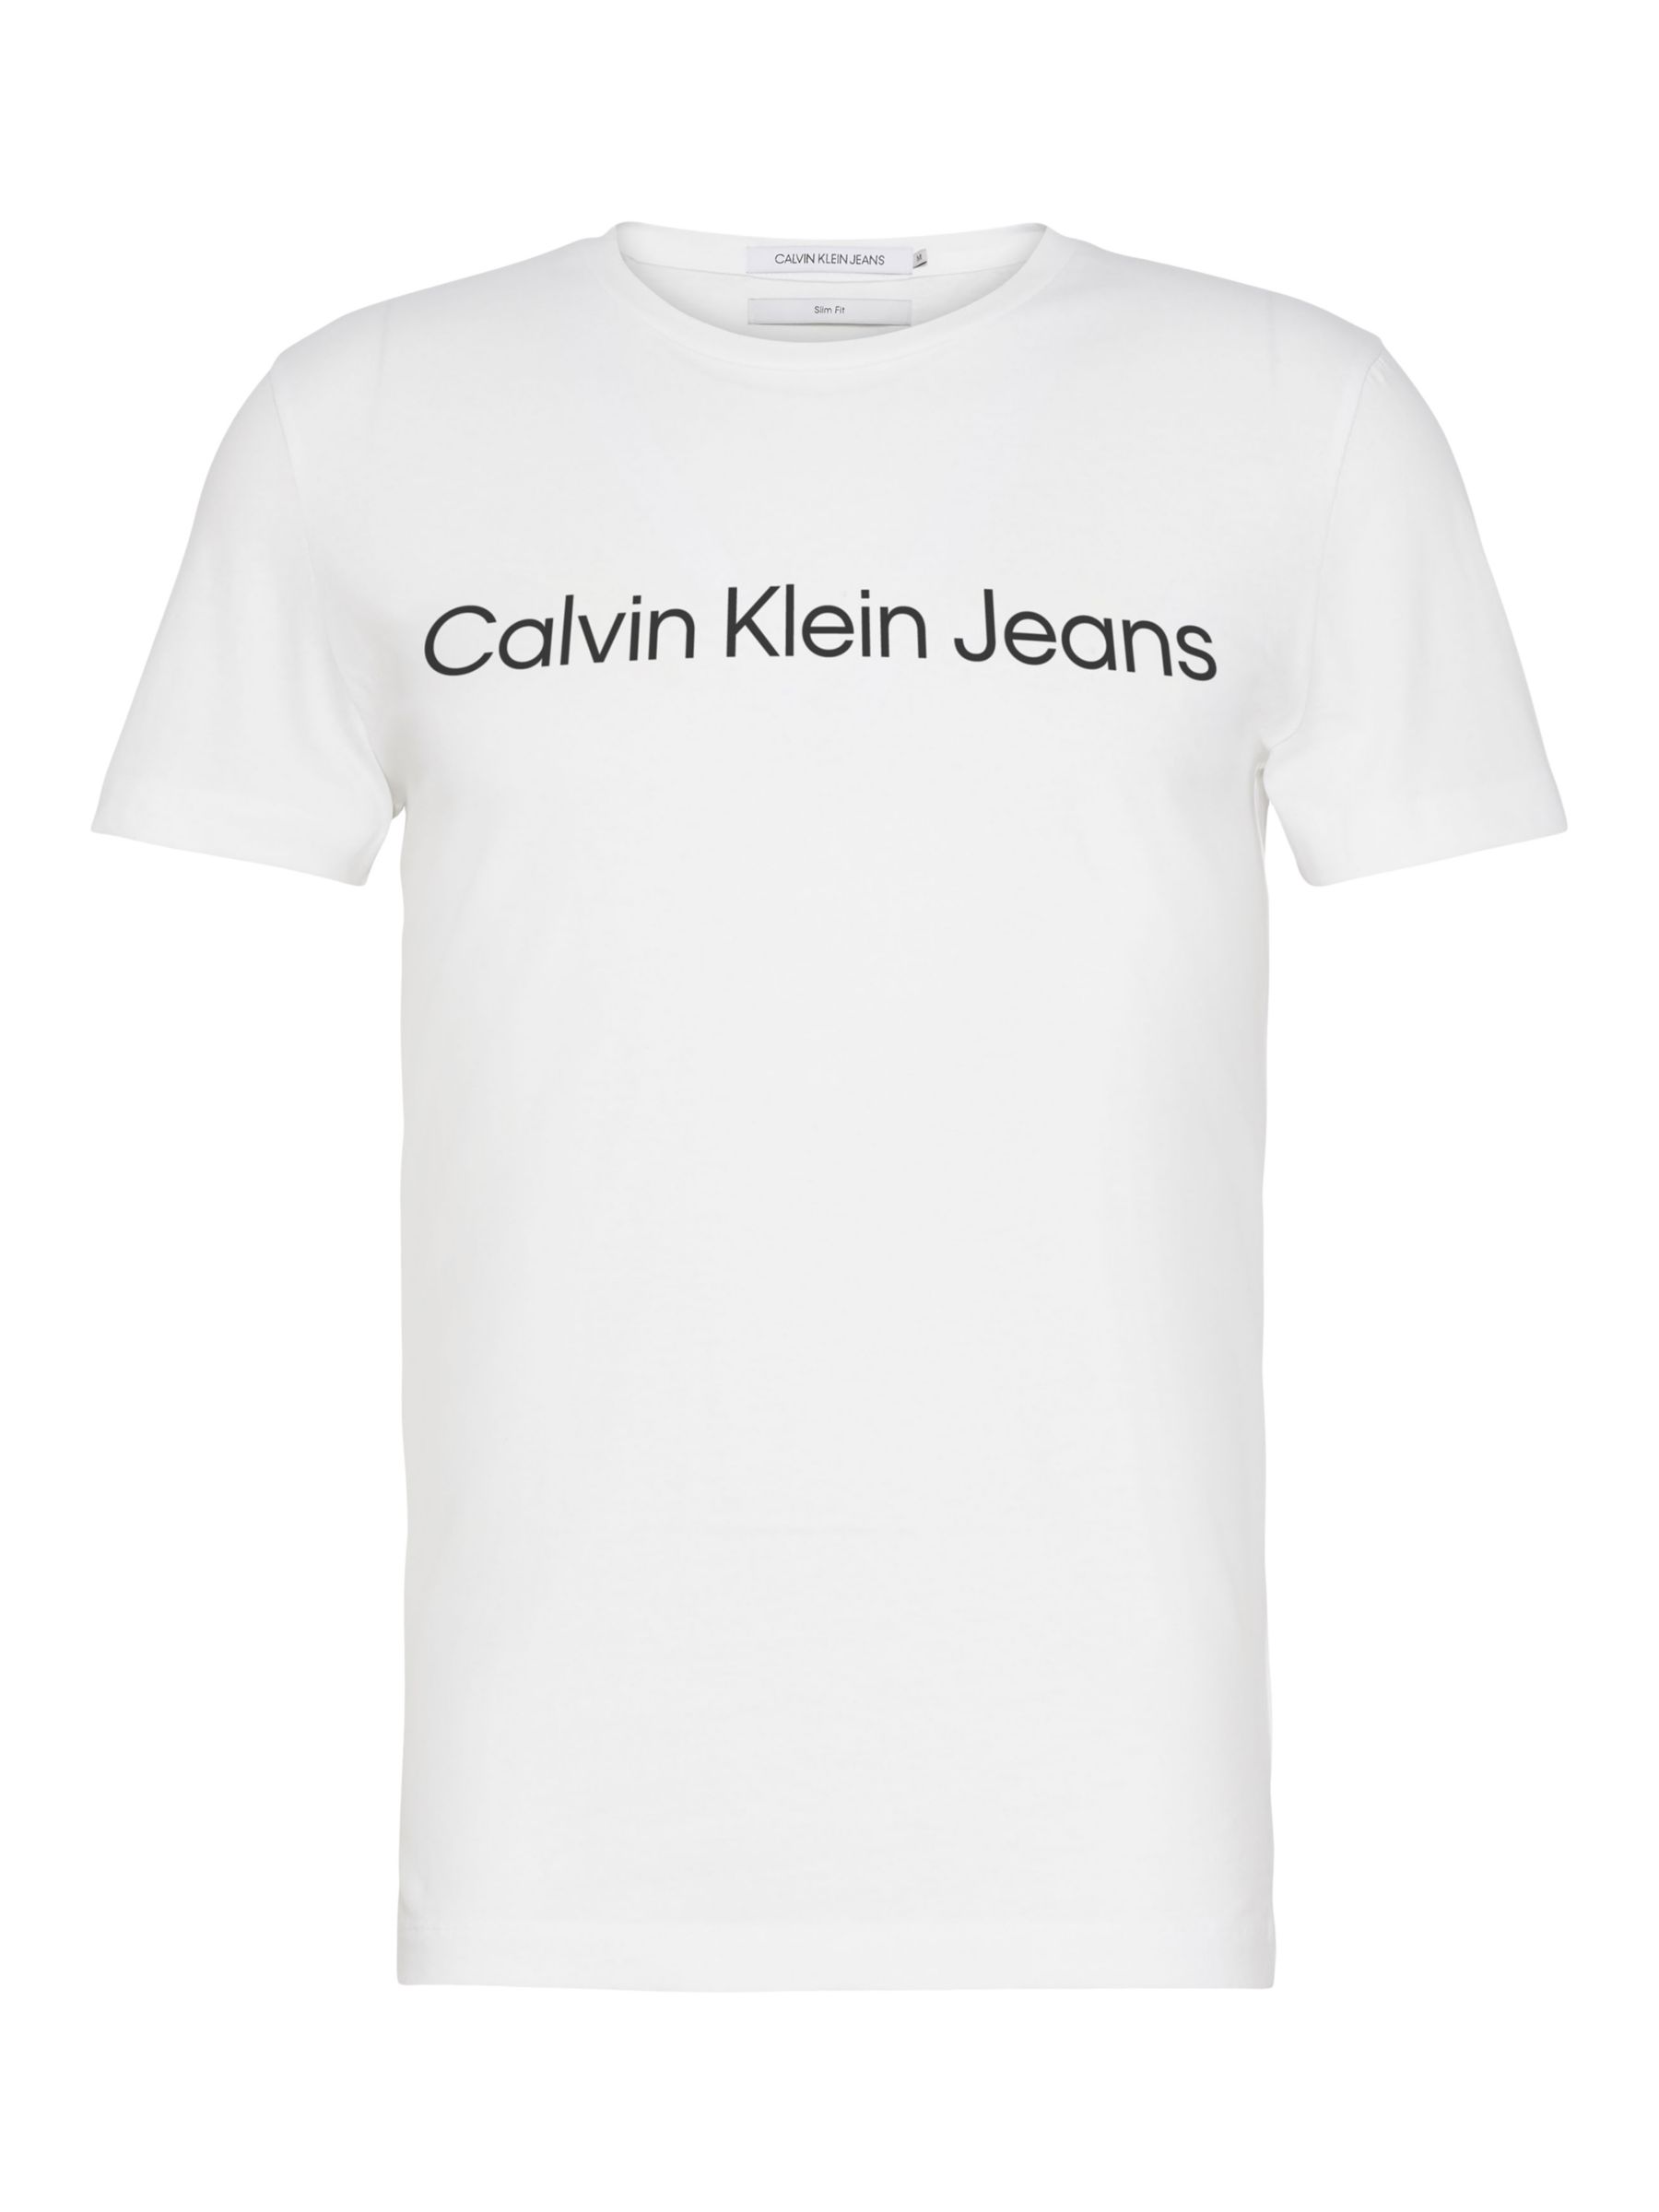 Calvin Klein Jeans Core Logo T-Shirt, Bright White at John Lewis & Partners